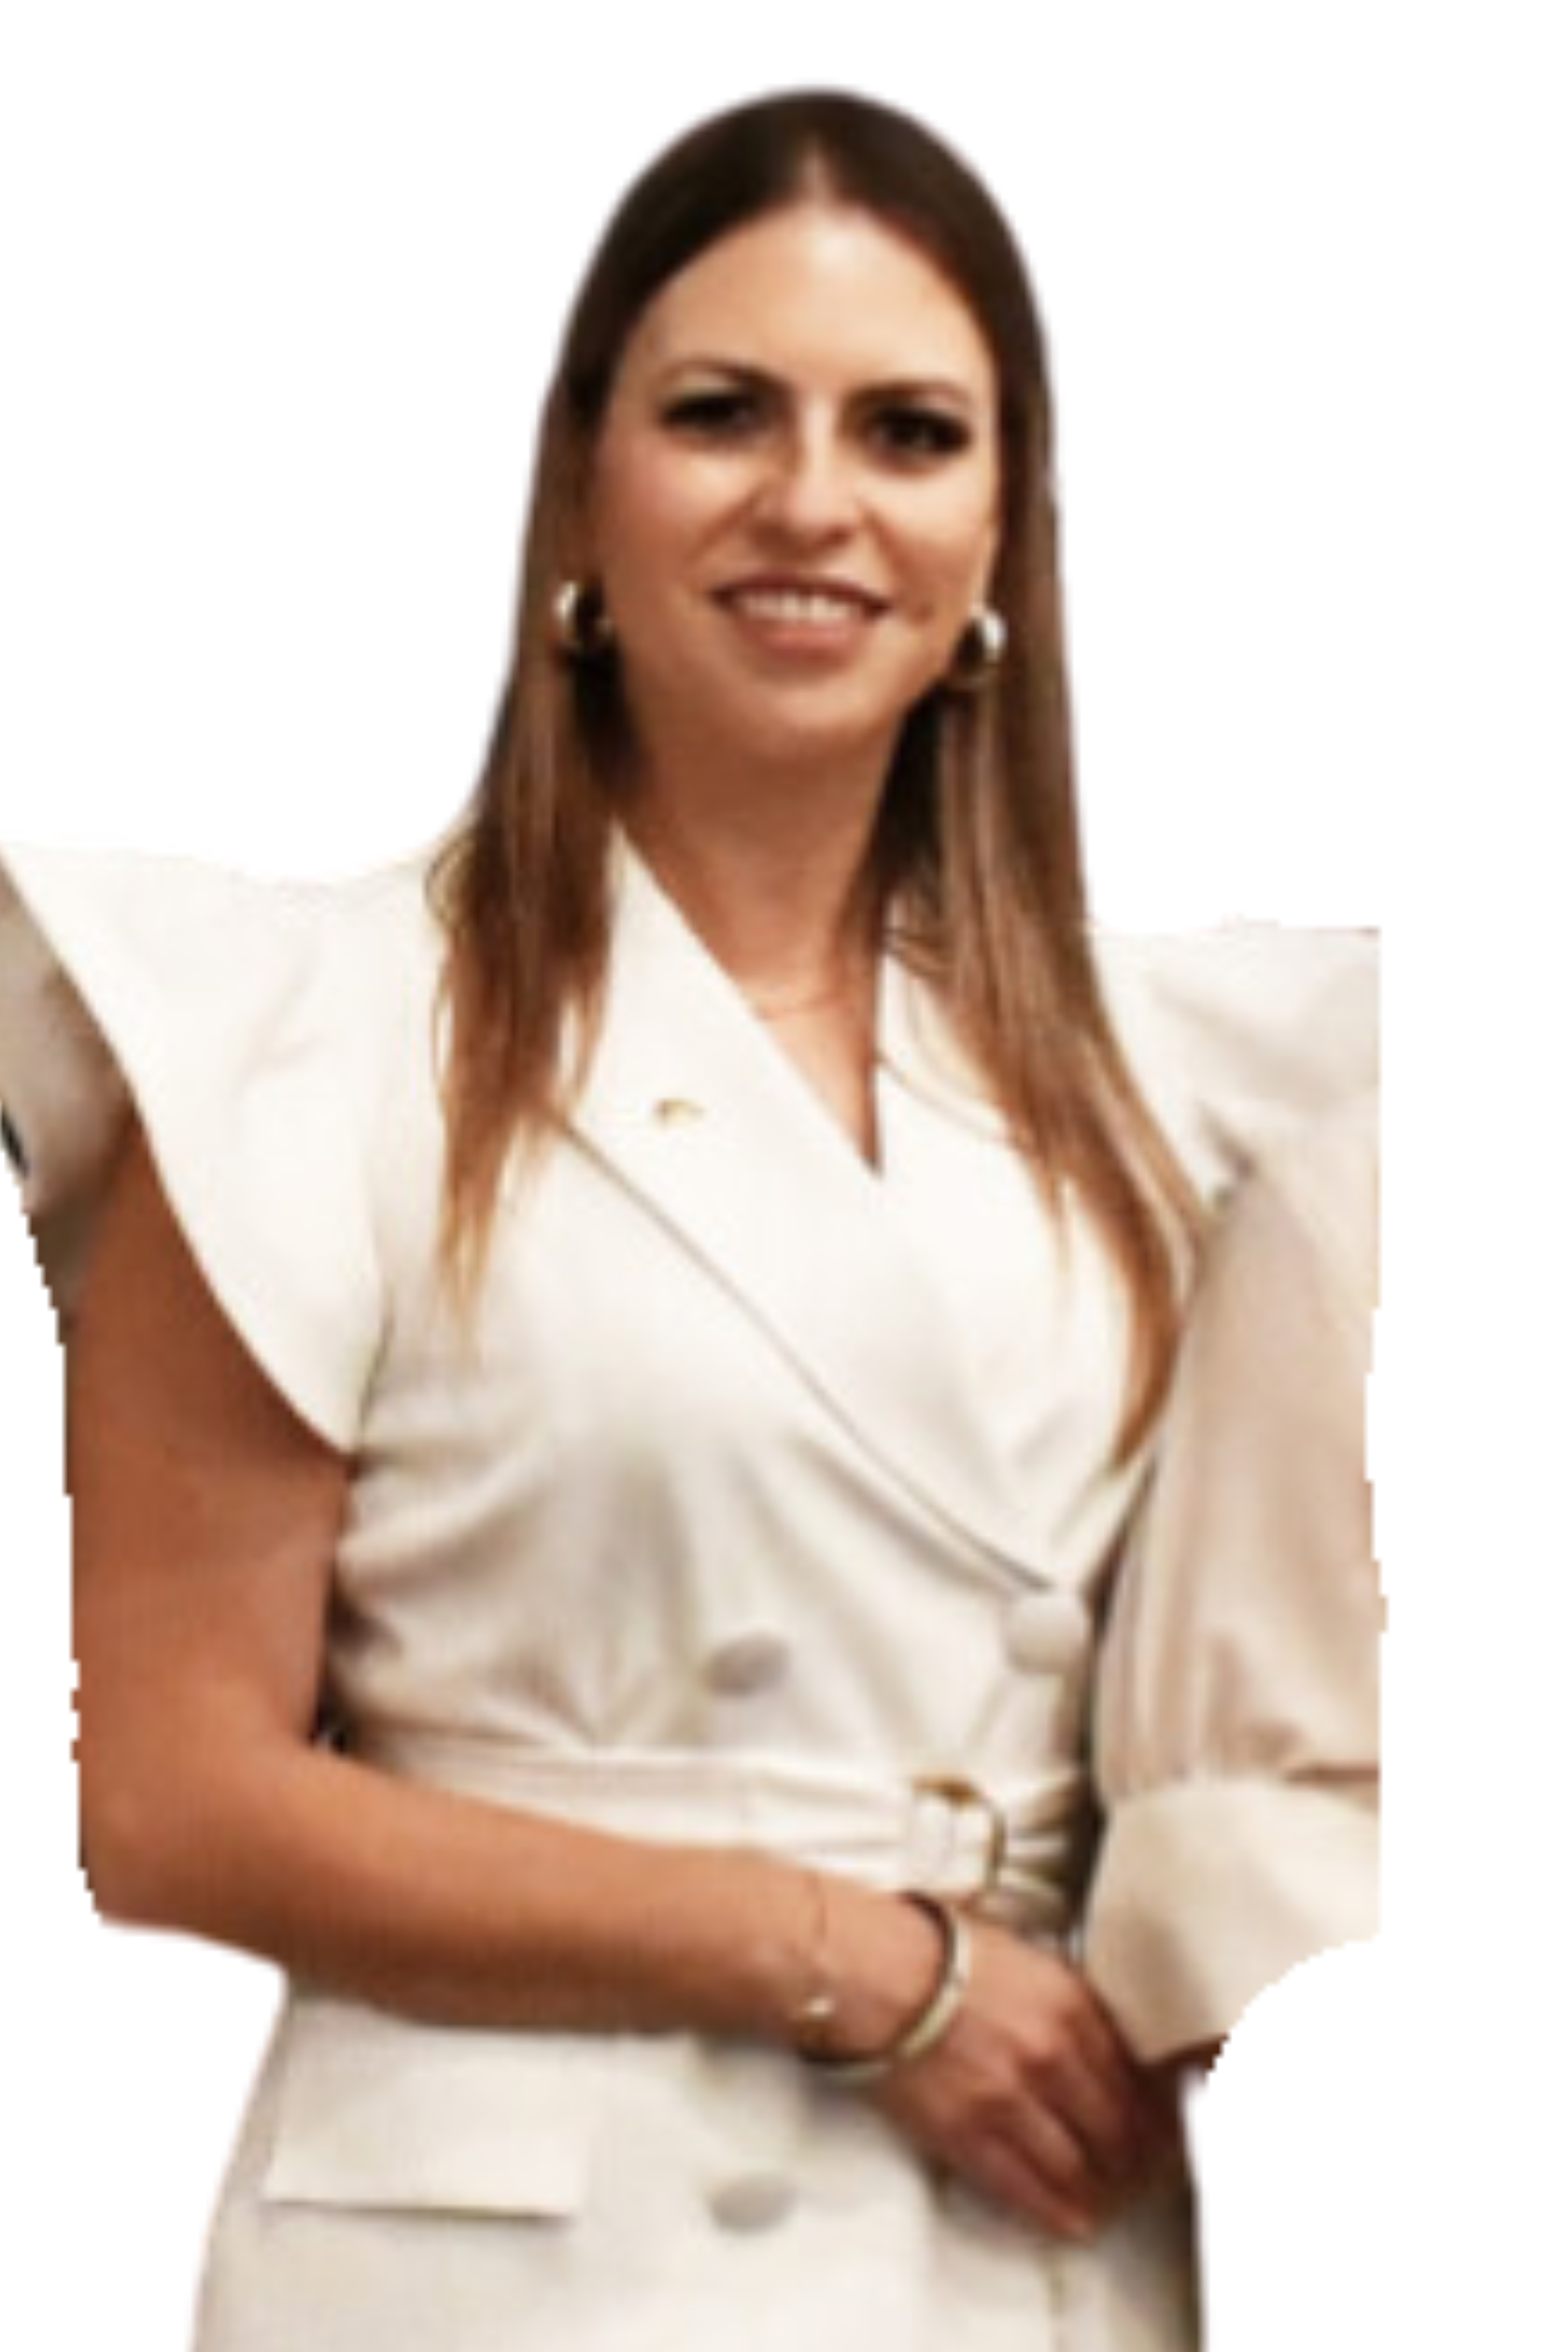 Arq. Leticia Paola Avelar Espinoza